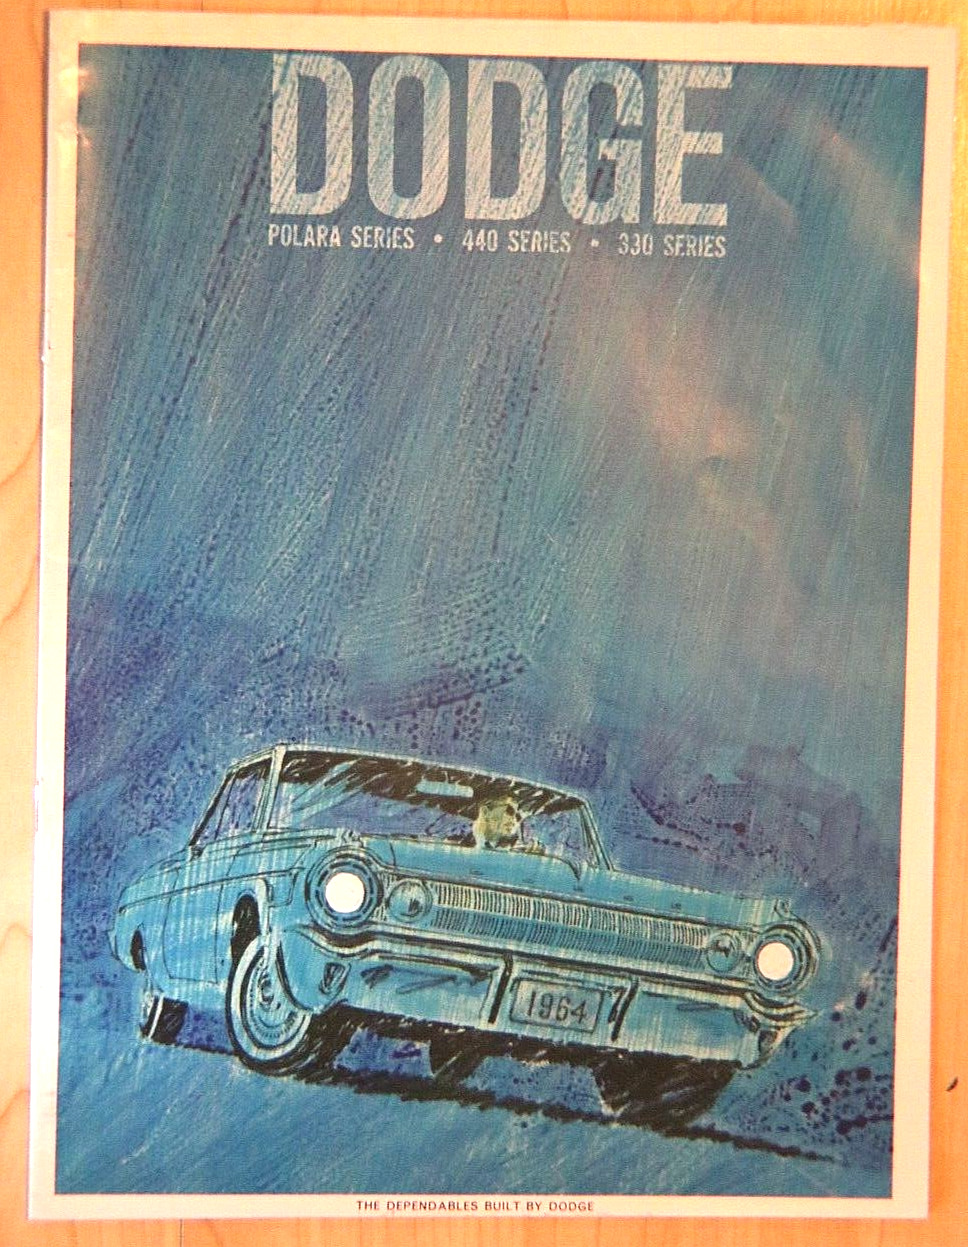 1964 dodge polara 440 330 series dealer sales brochure hamptons auto service NJ